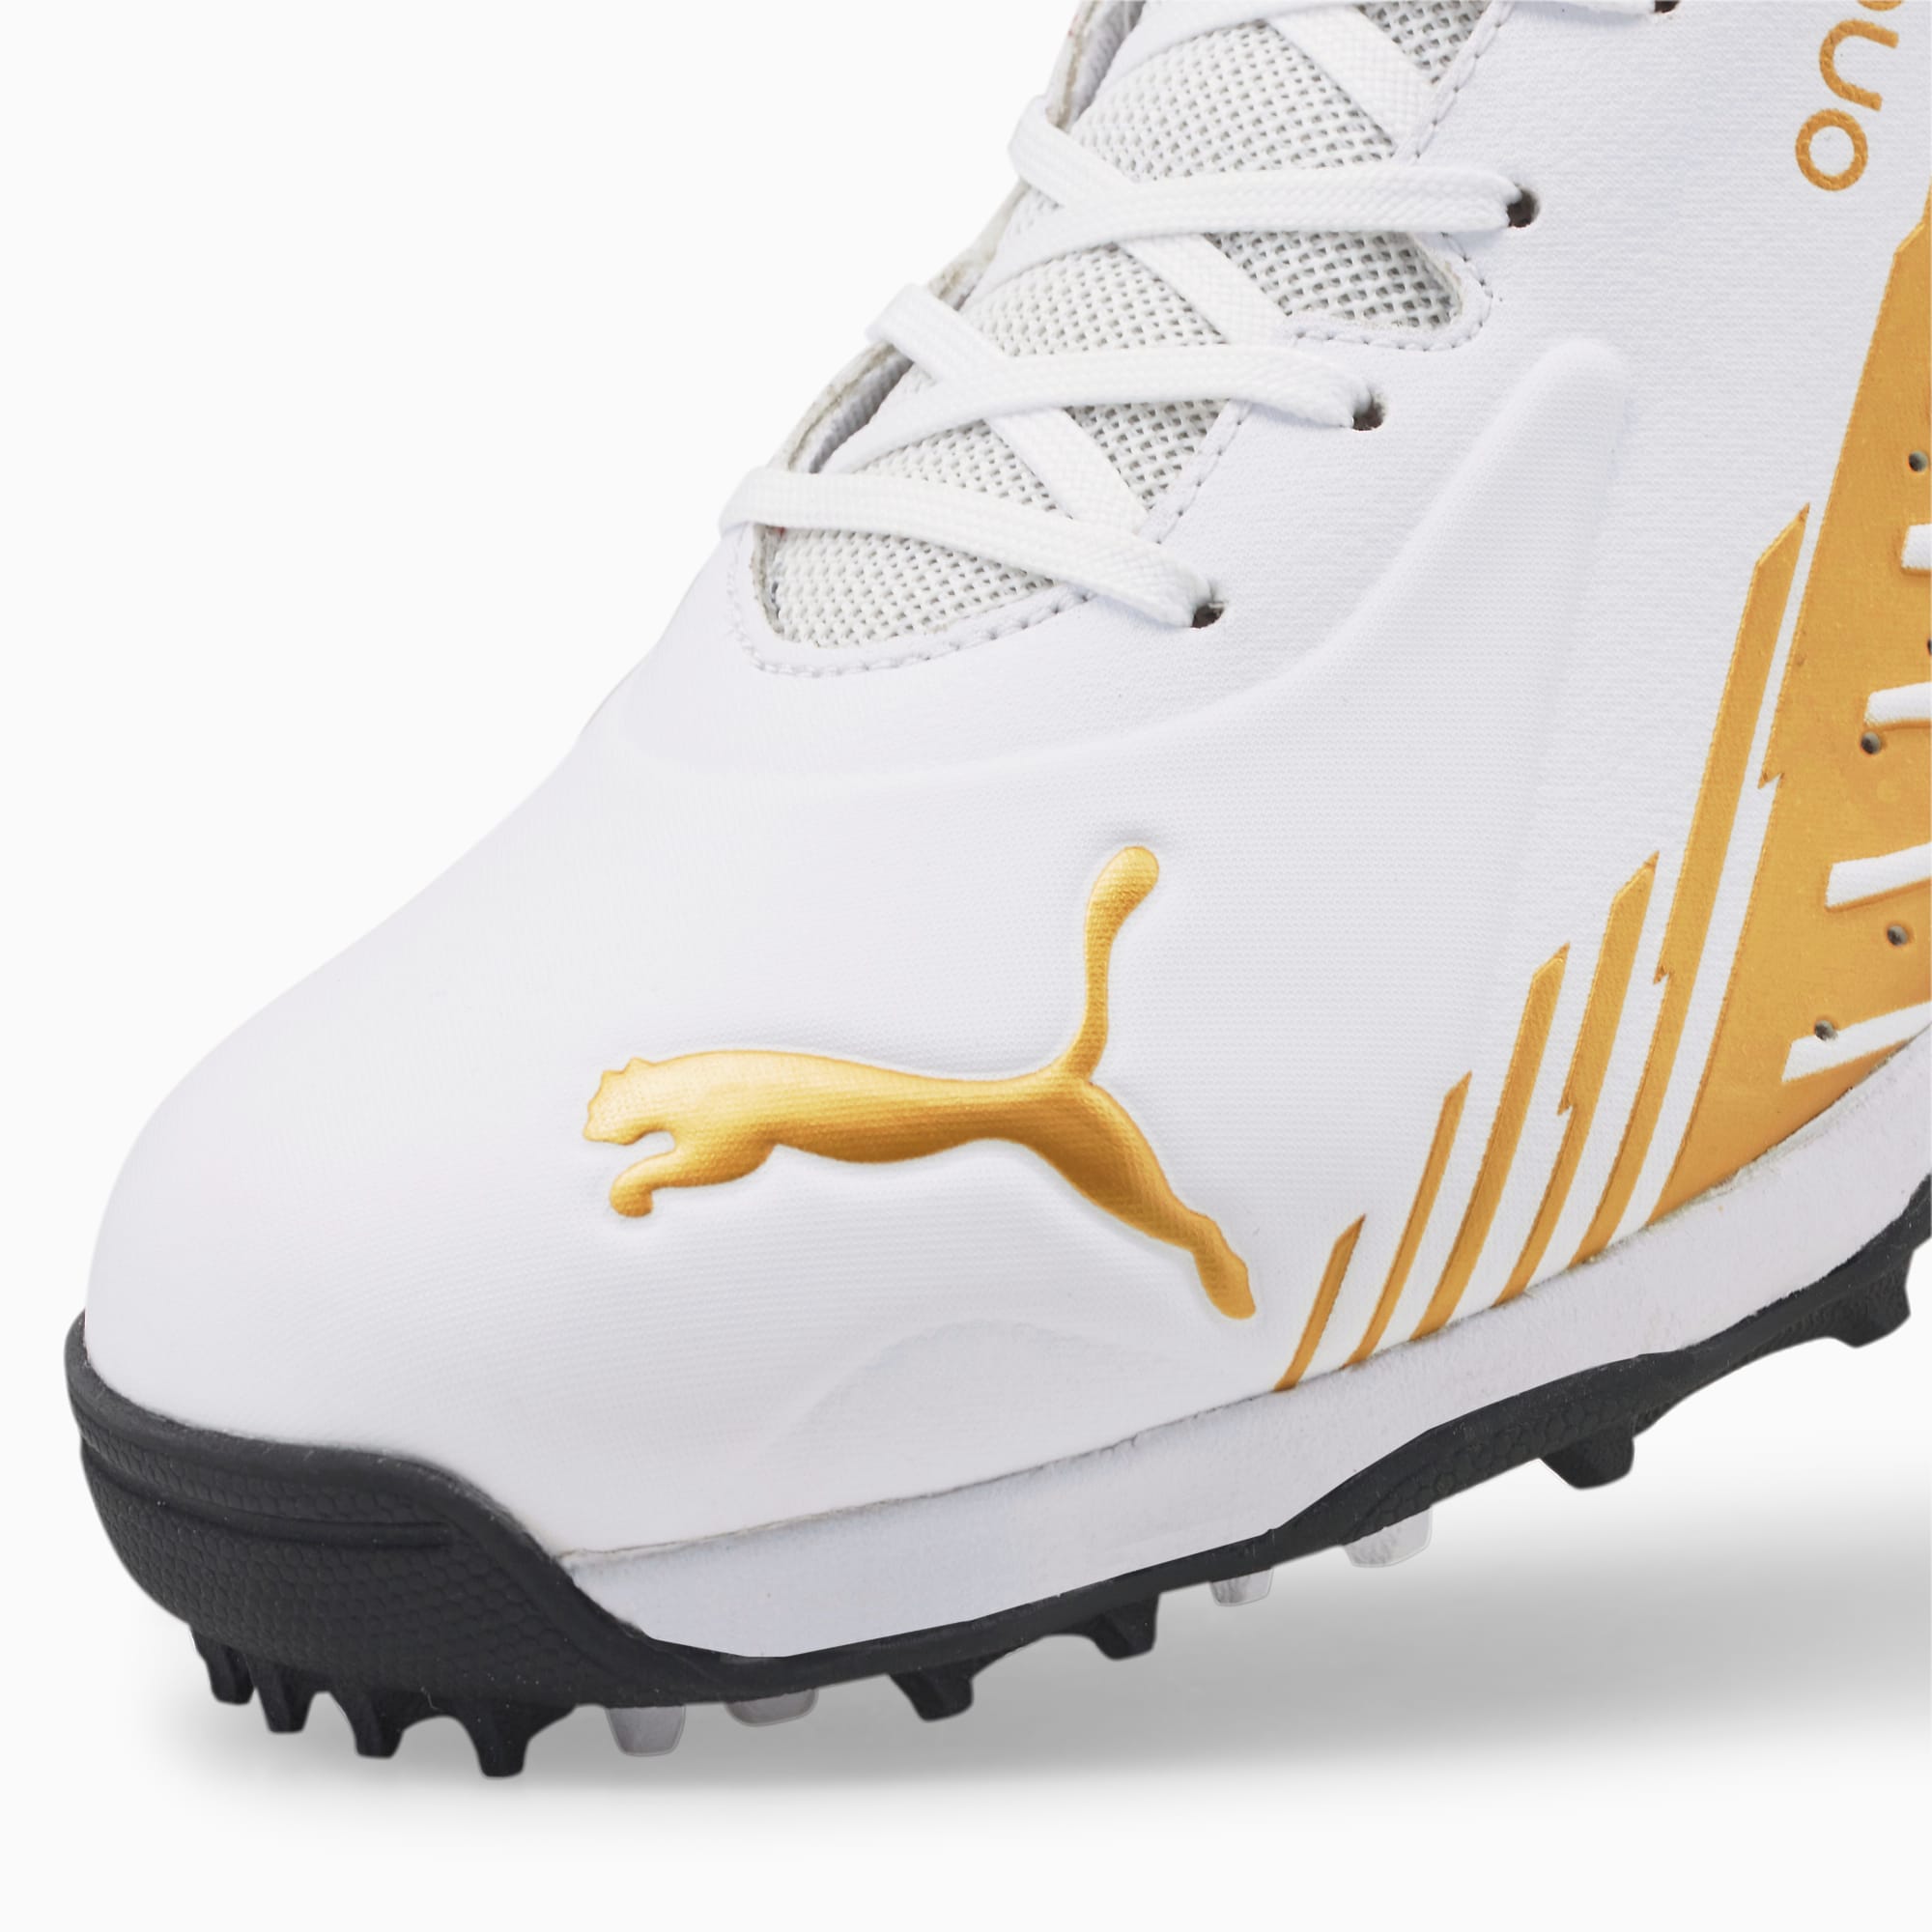 10 | PUMA Cricket Shoes | Puma X One-8 FH Rubber 22 Cricket Shoes